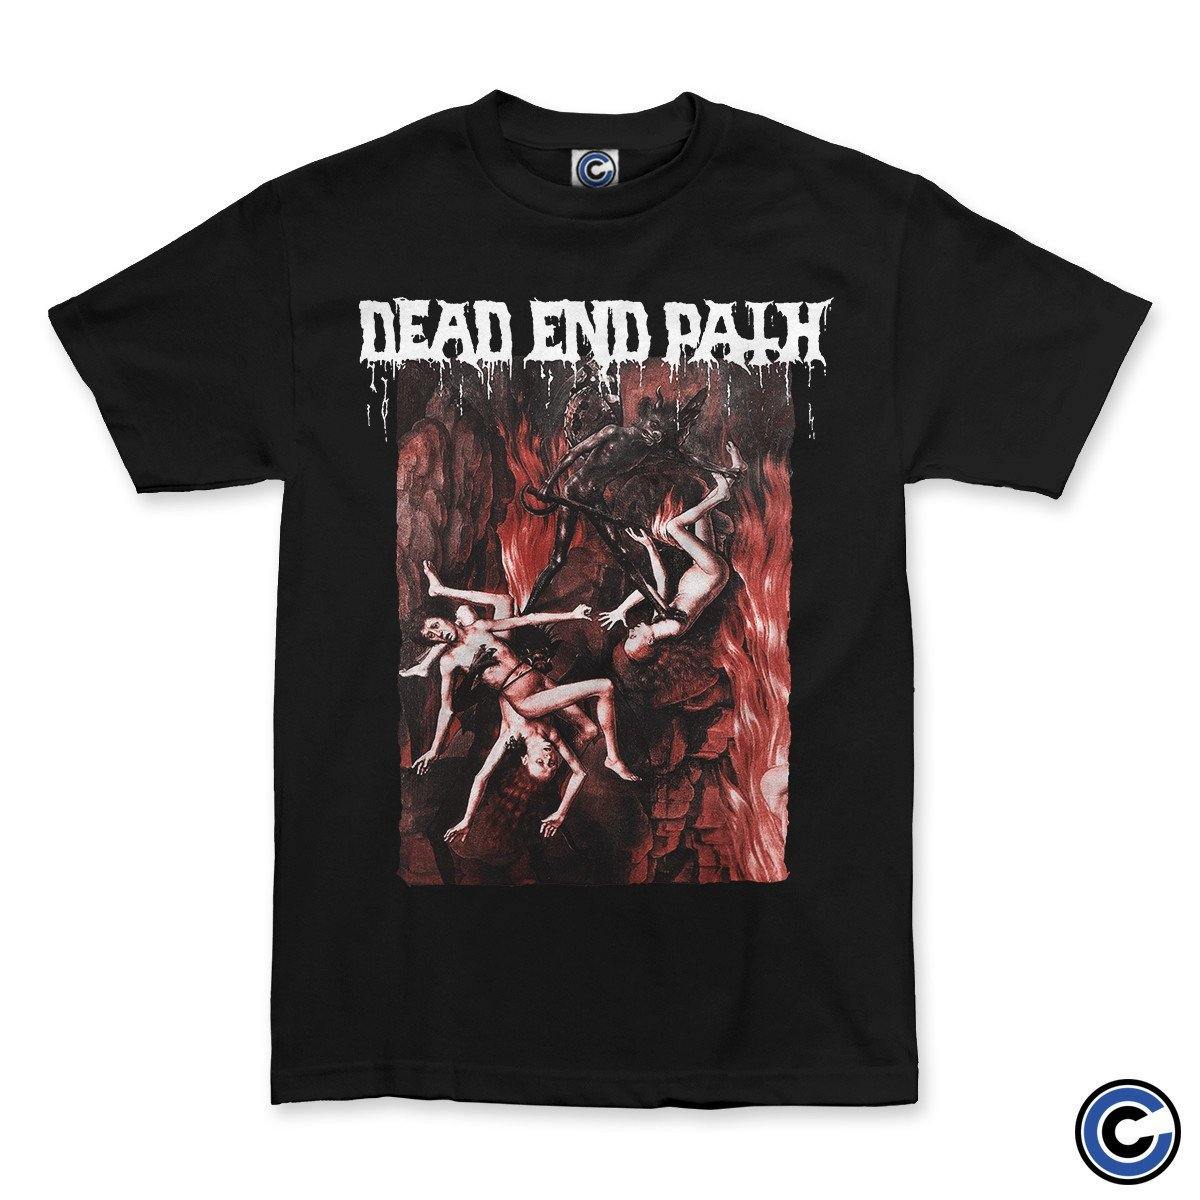 Buy – Dead End Path "Hell" Shirt – Band & Music Merch – Cold Cuts Merch